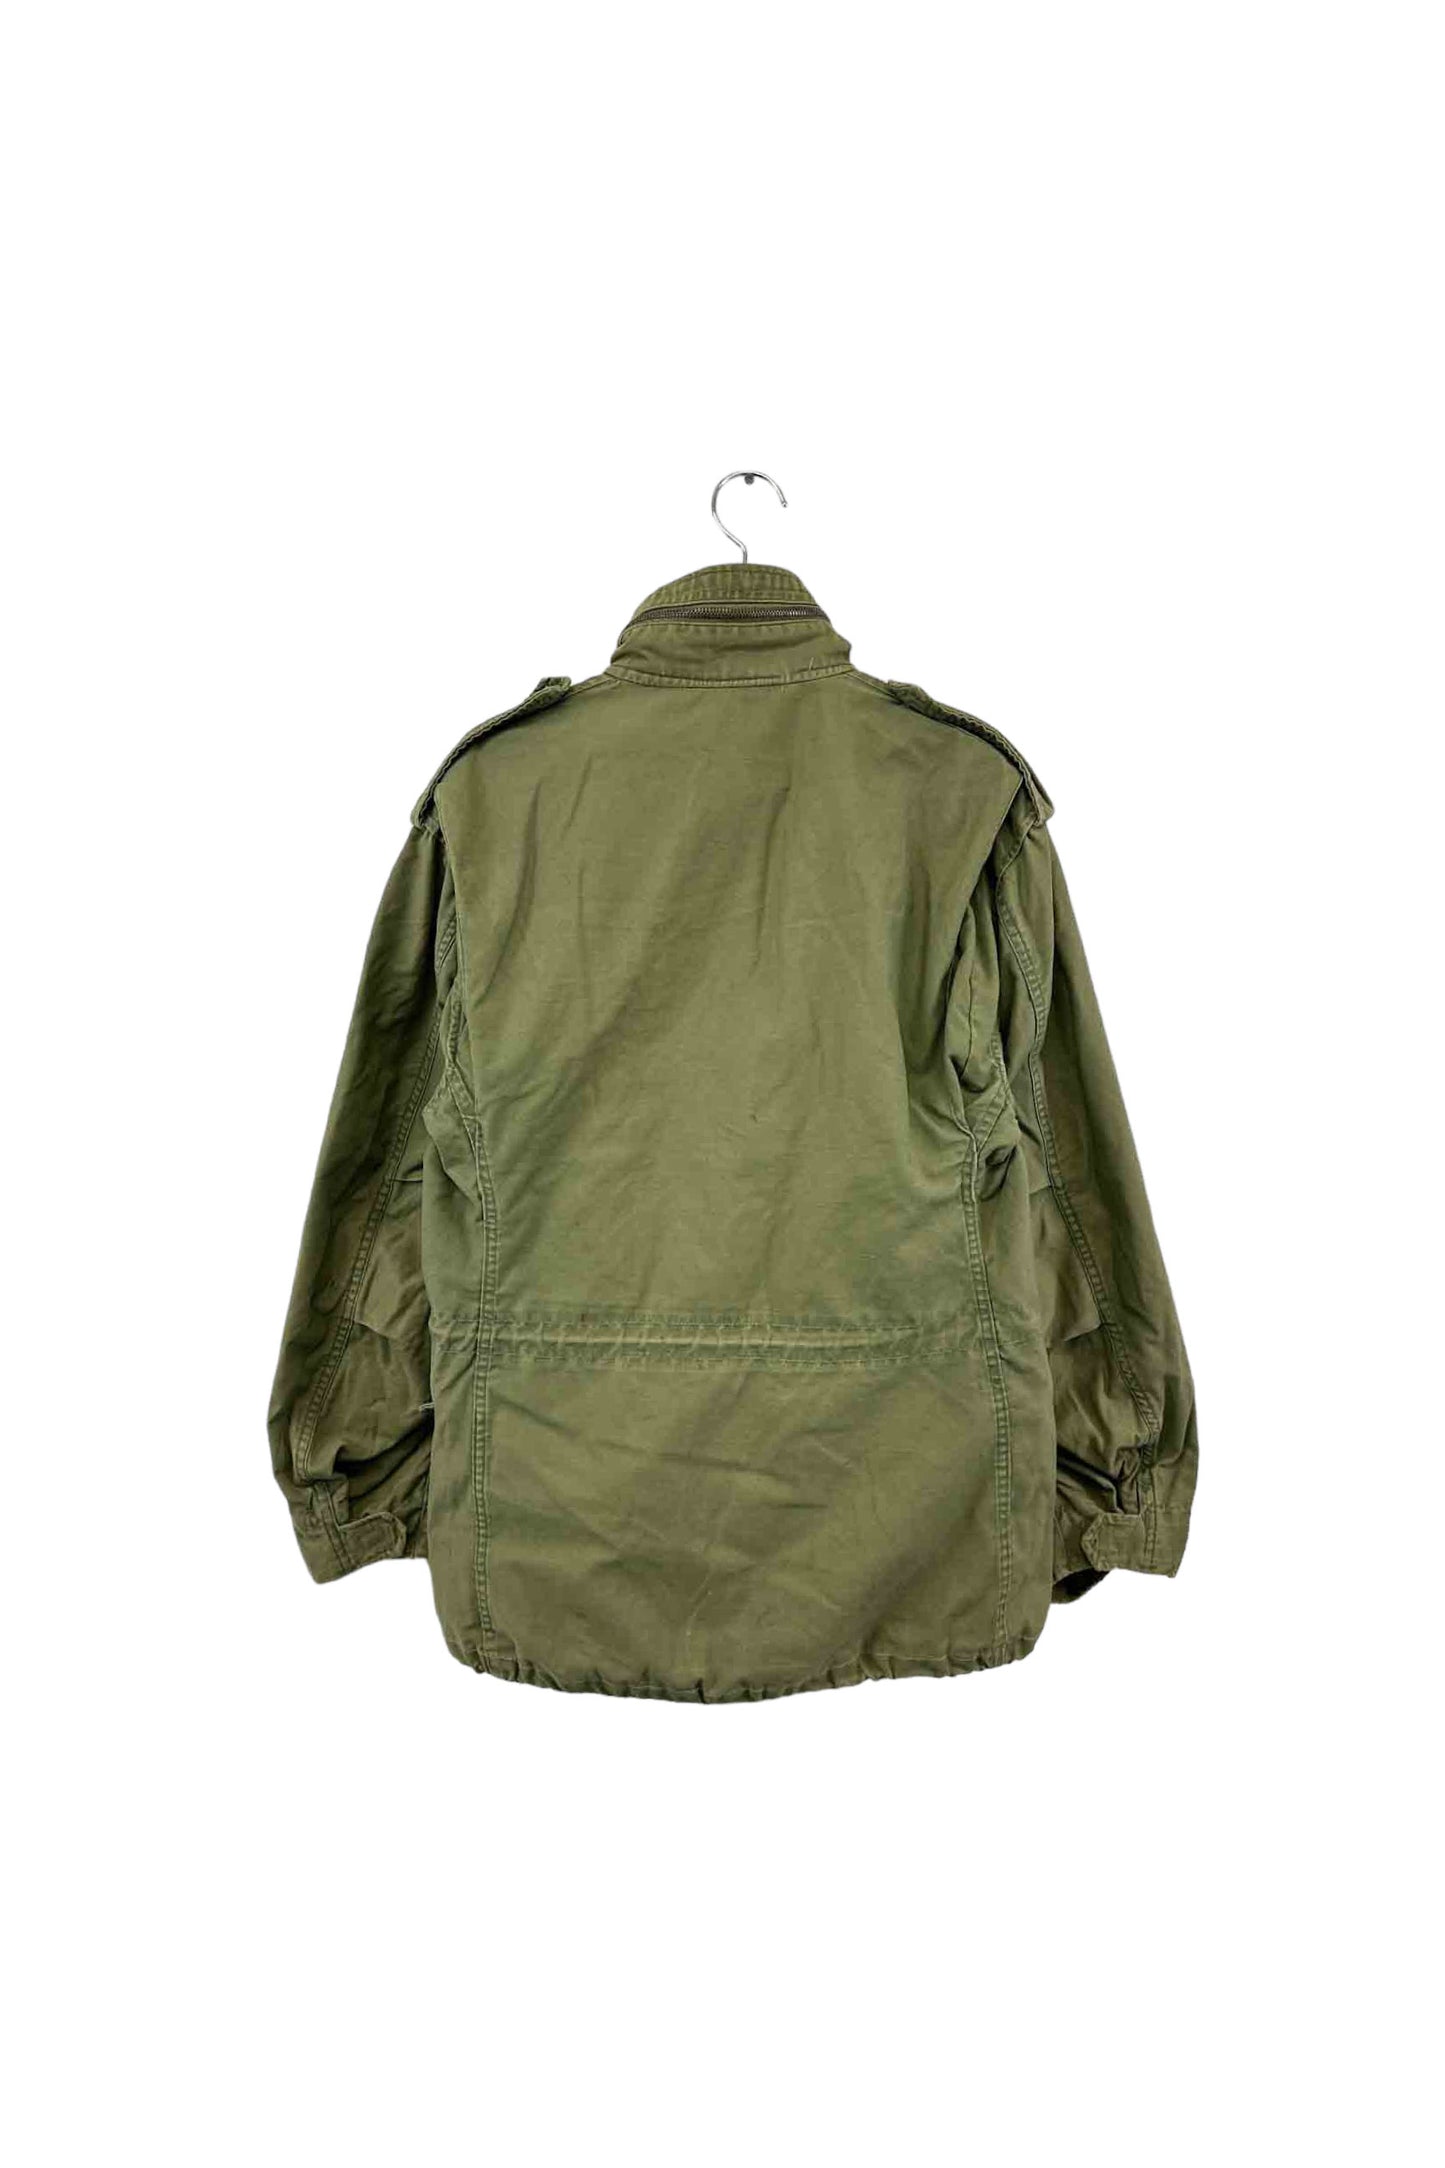 M-65 military jacket